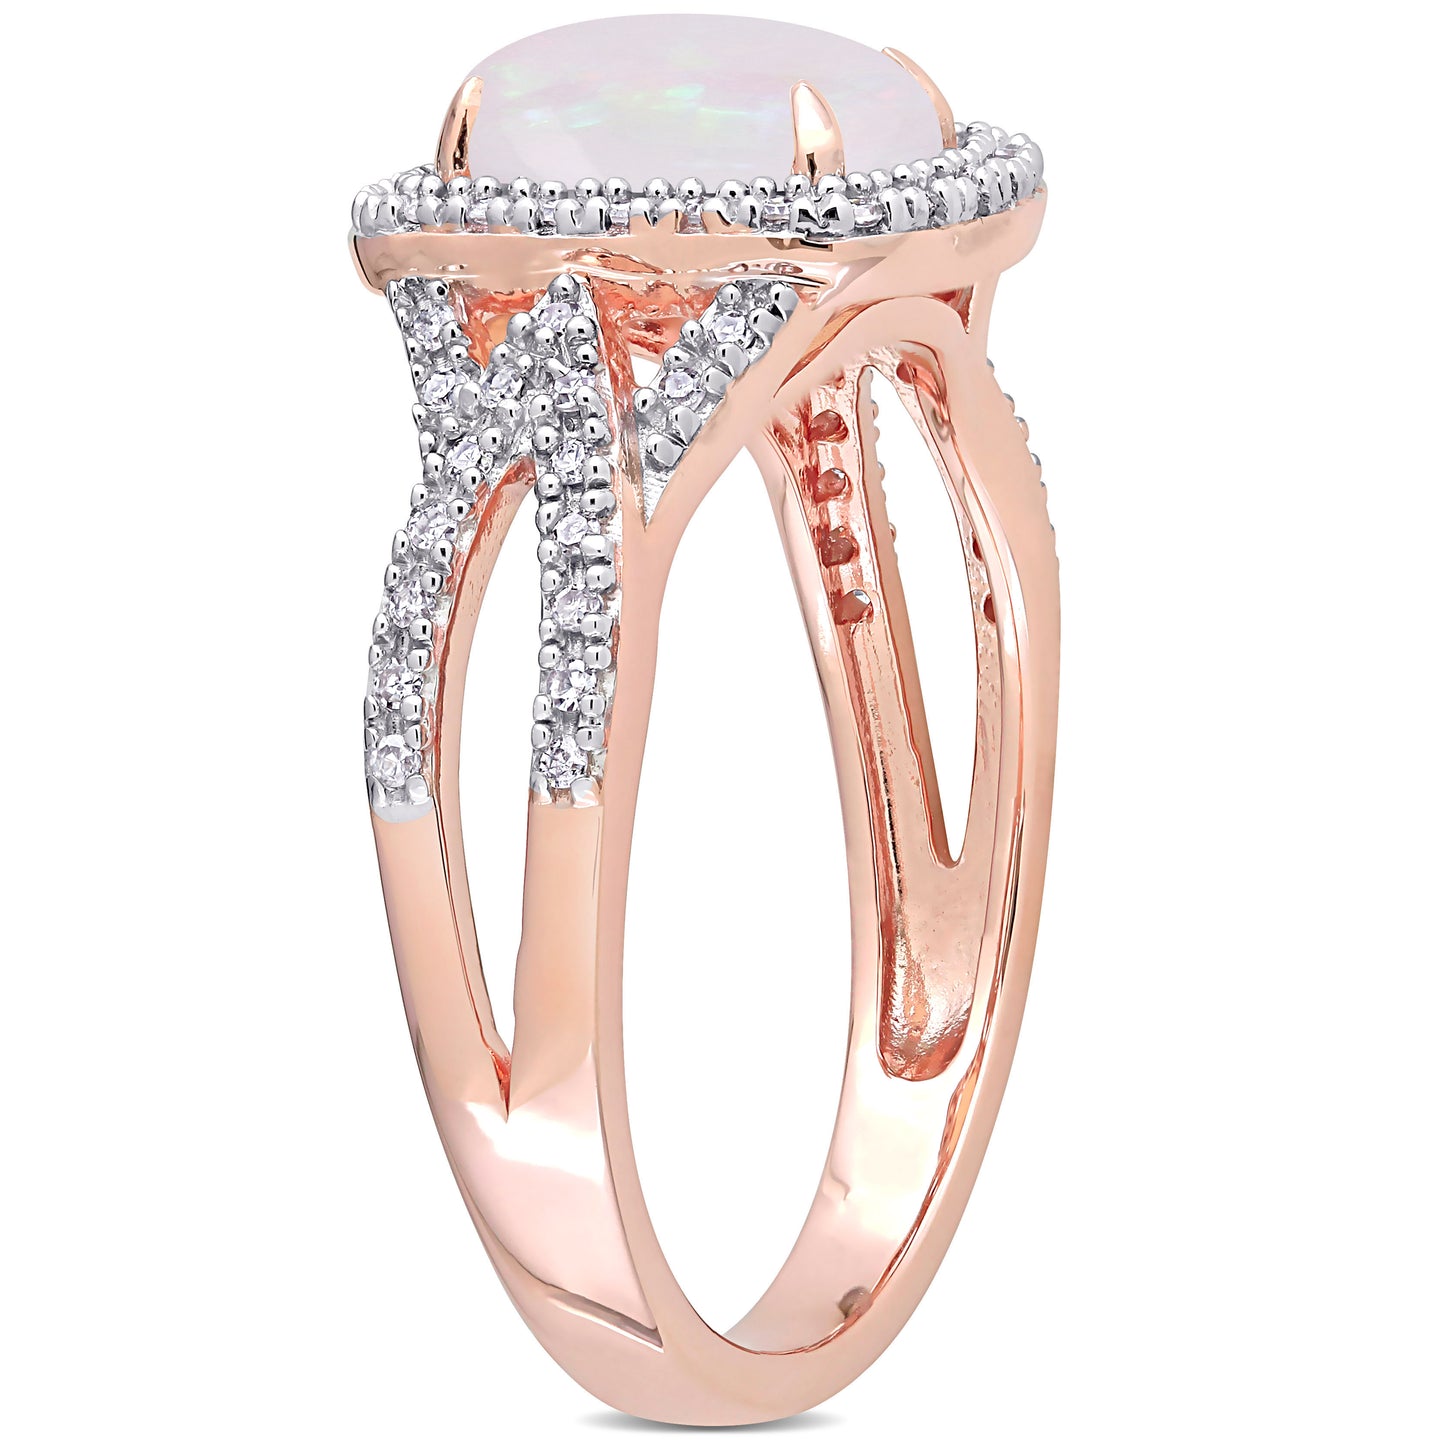 Opal & Diamond Ring in 10k Rose Gold